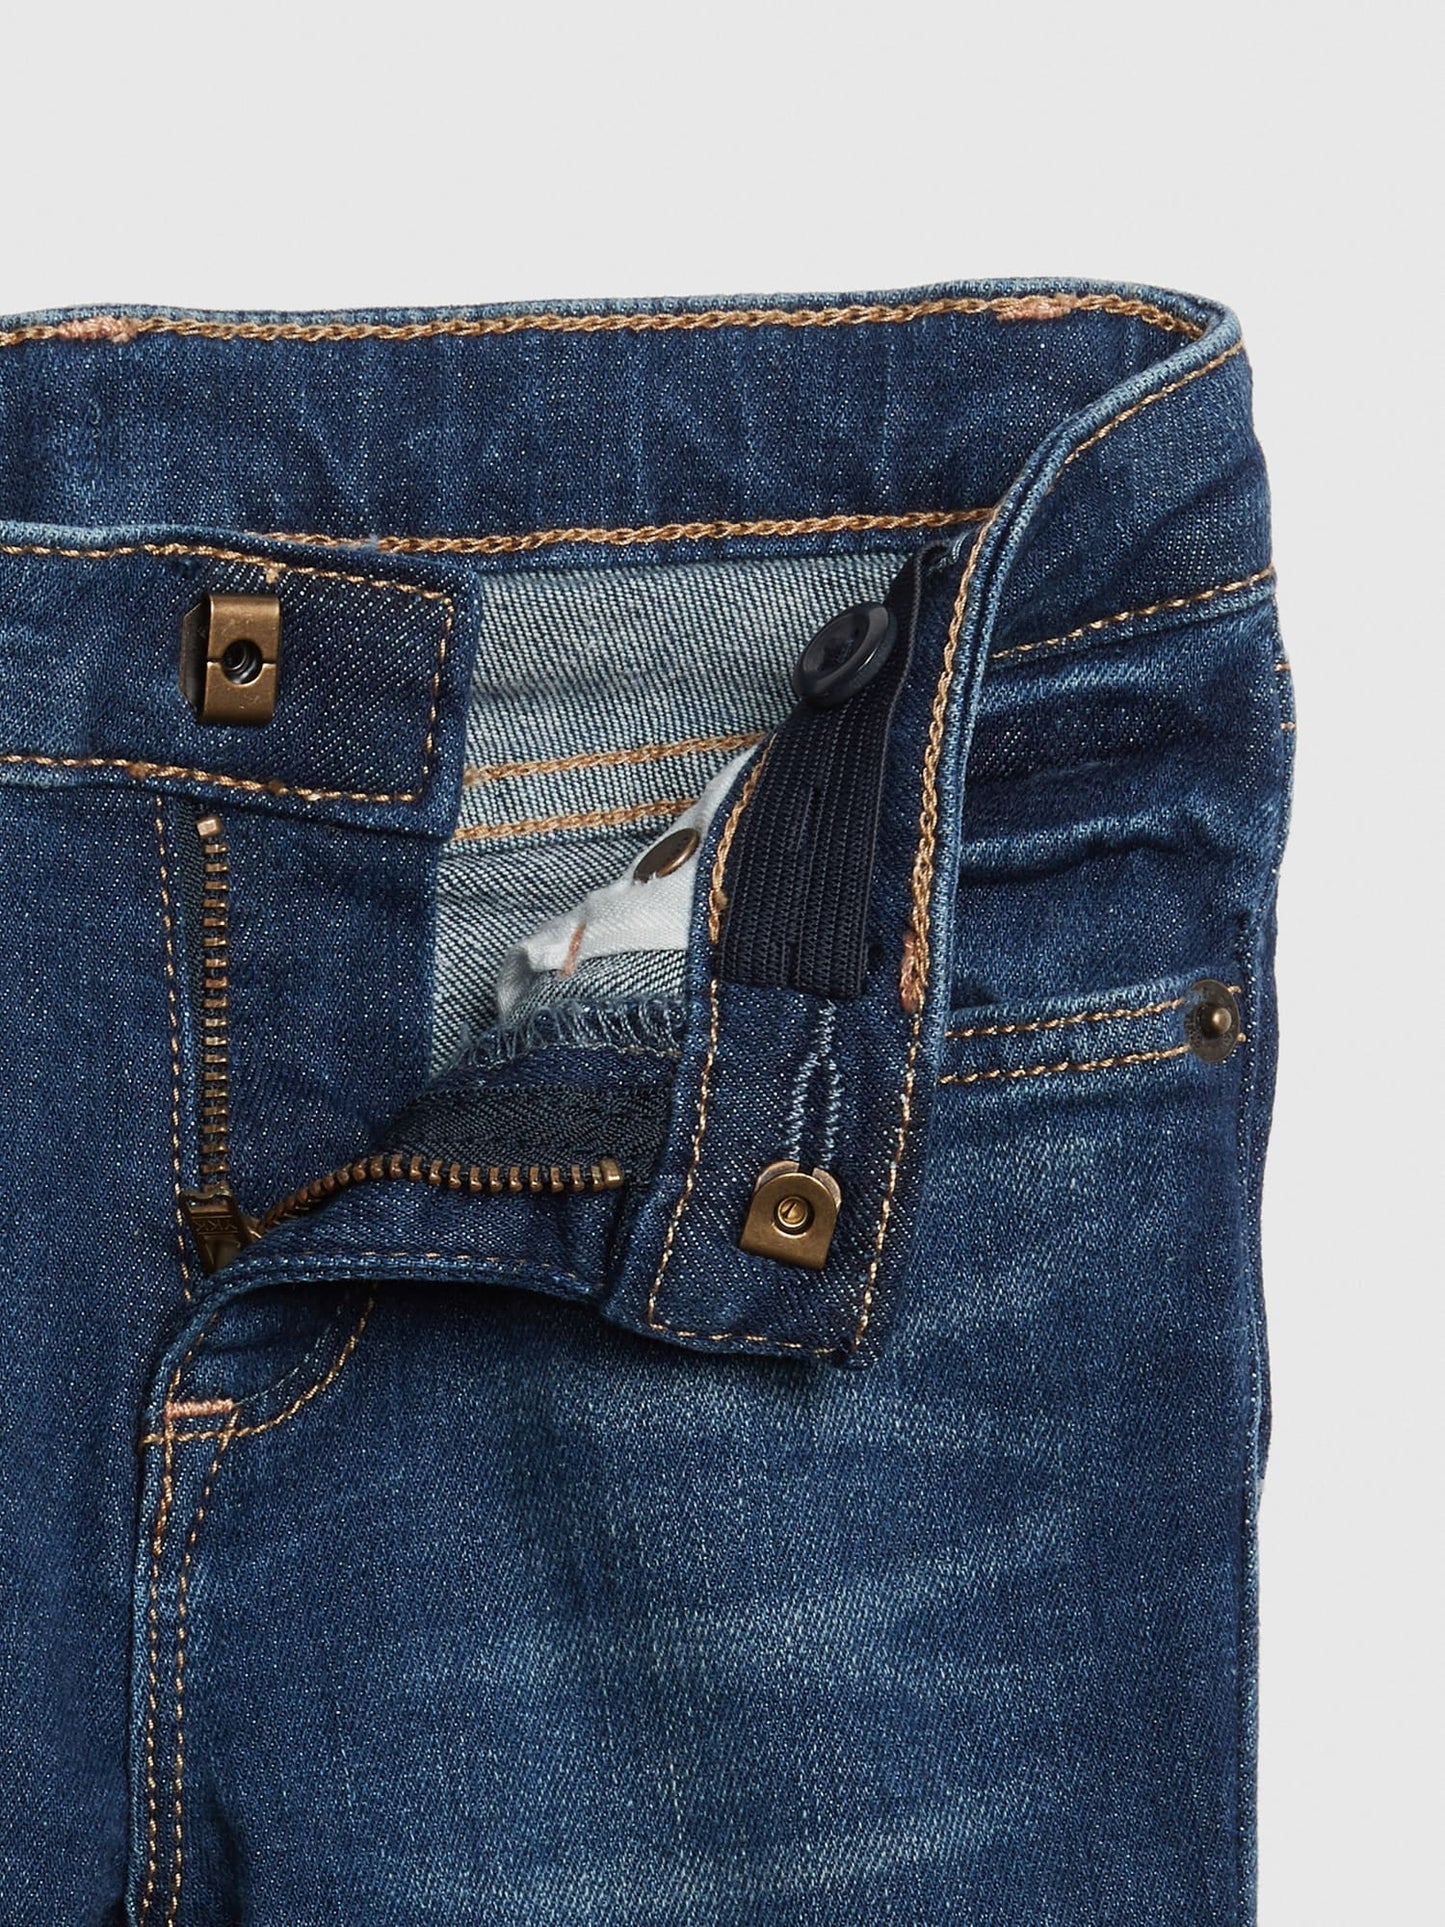 Gap Toddler Skinny Jeans With Stretch - Medium Wash